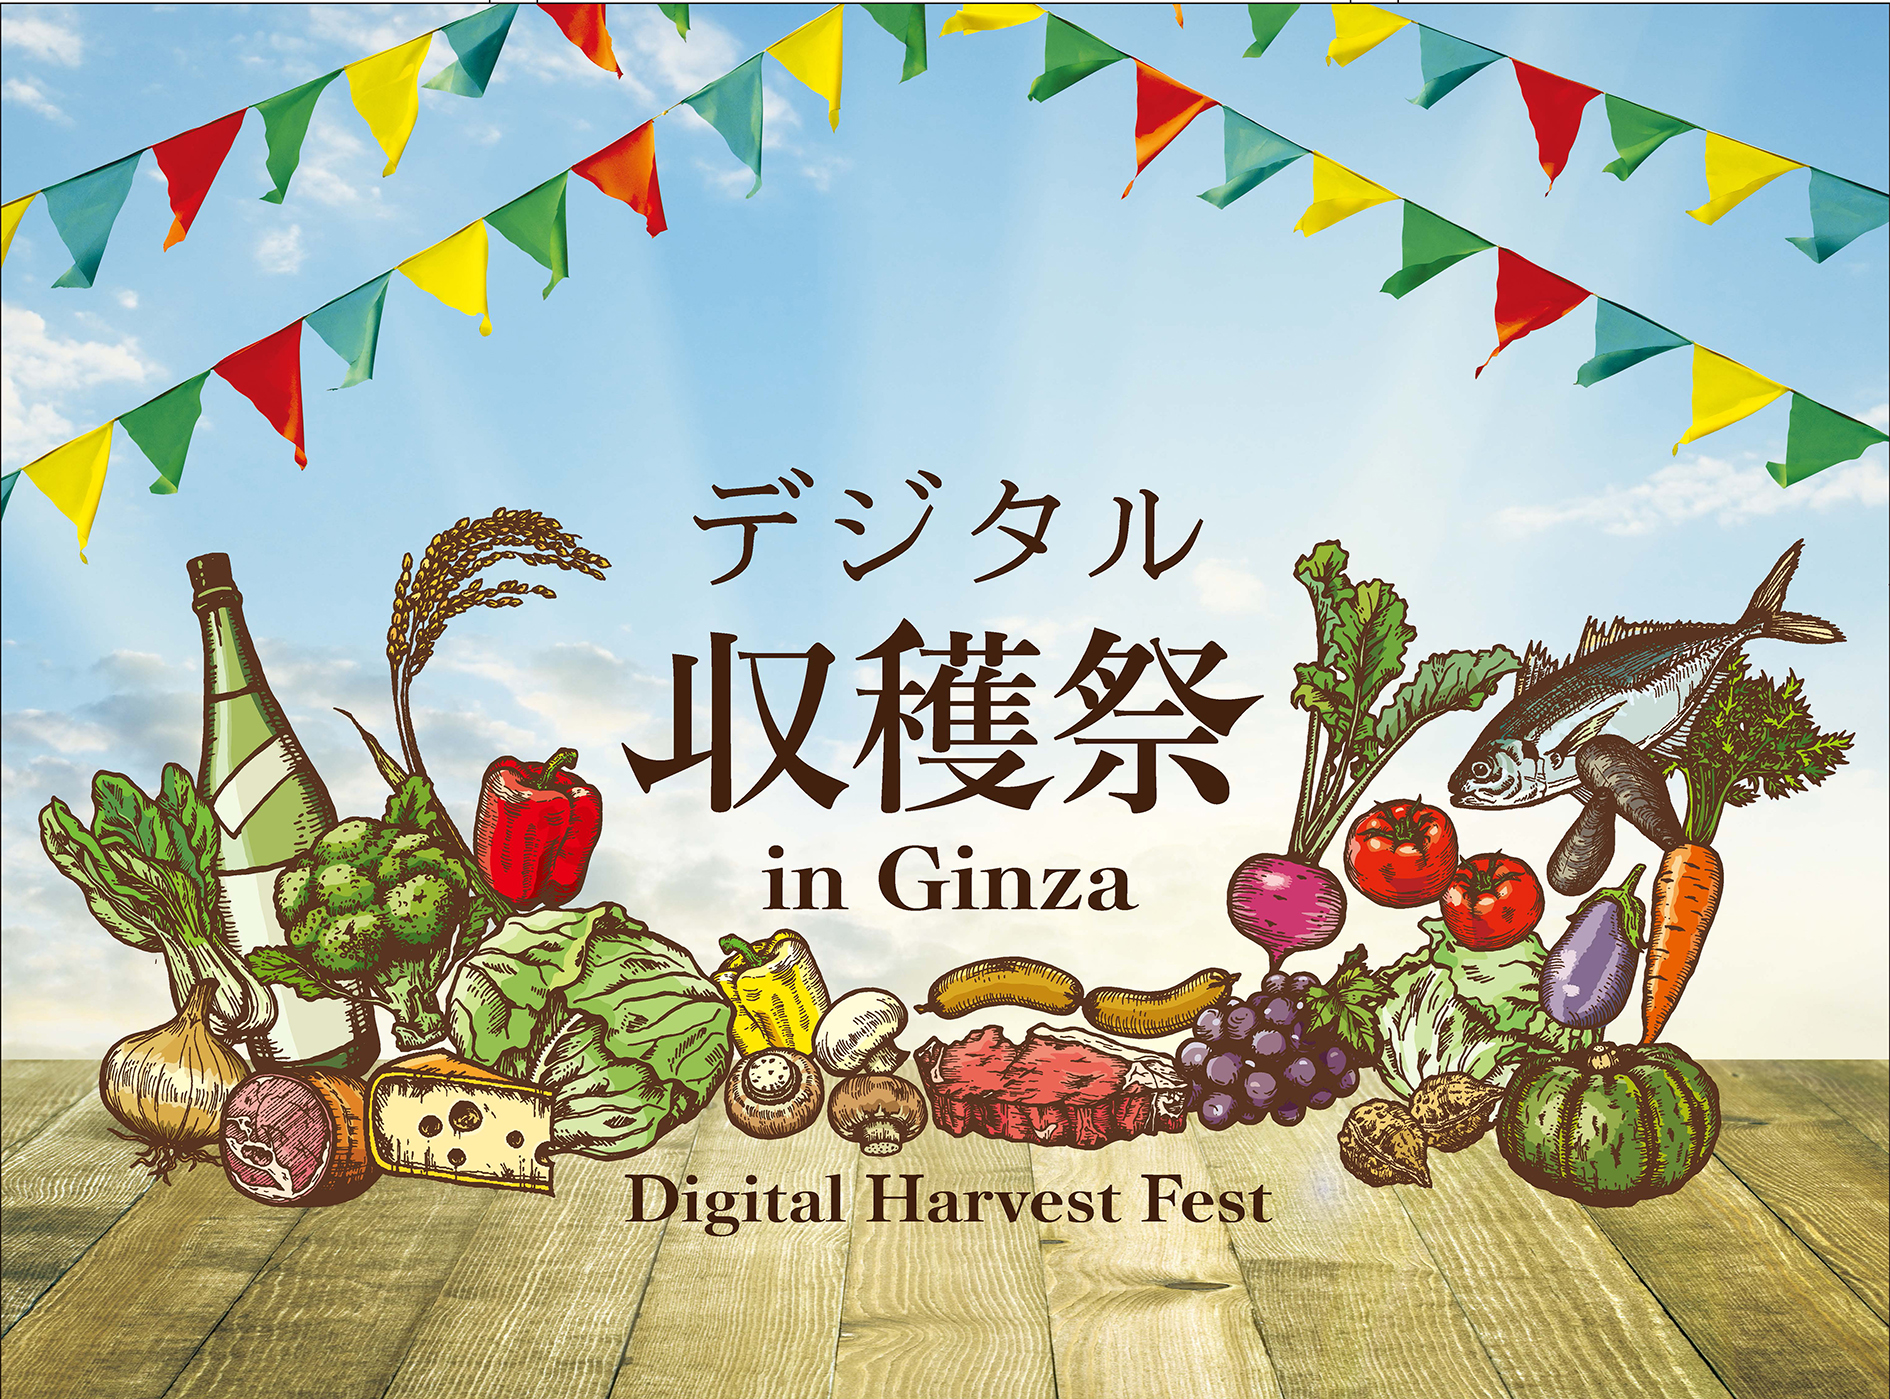 METoA GINZA展示会「デジタル収穫祭 in Ginza」に関するお知らせ